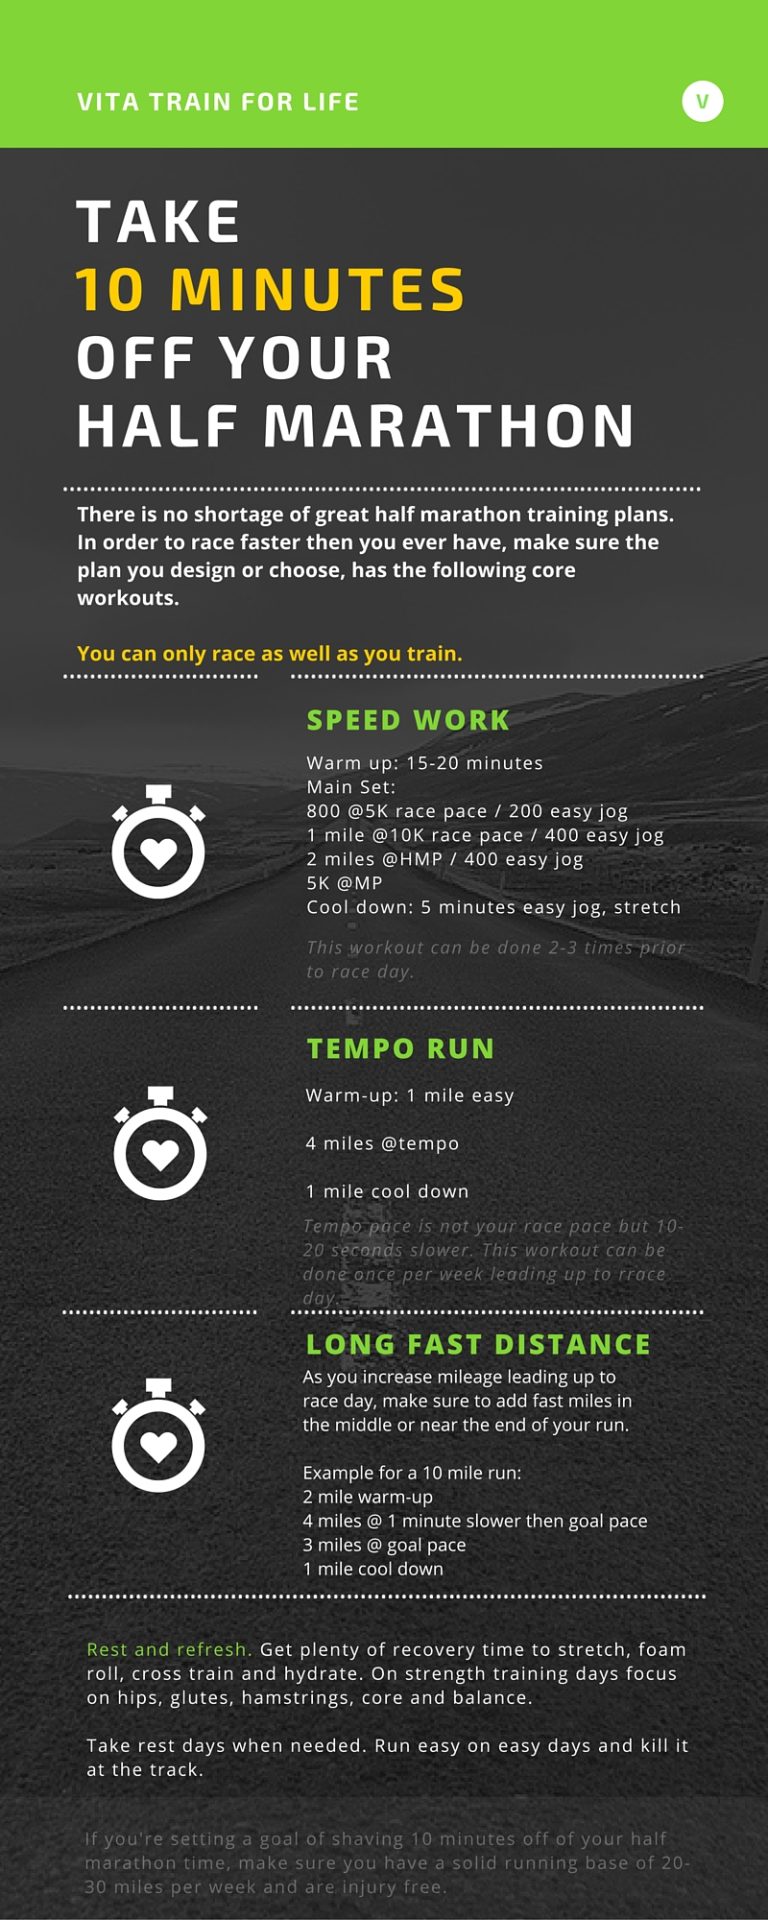 How to Improve Half Marathon Time?